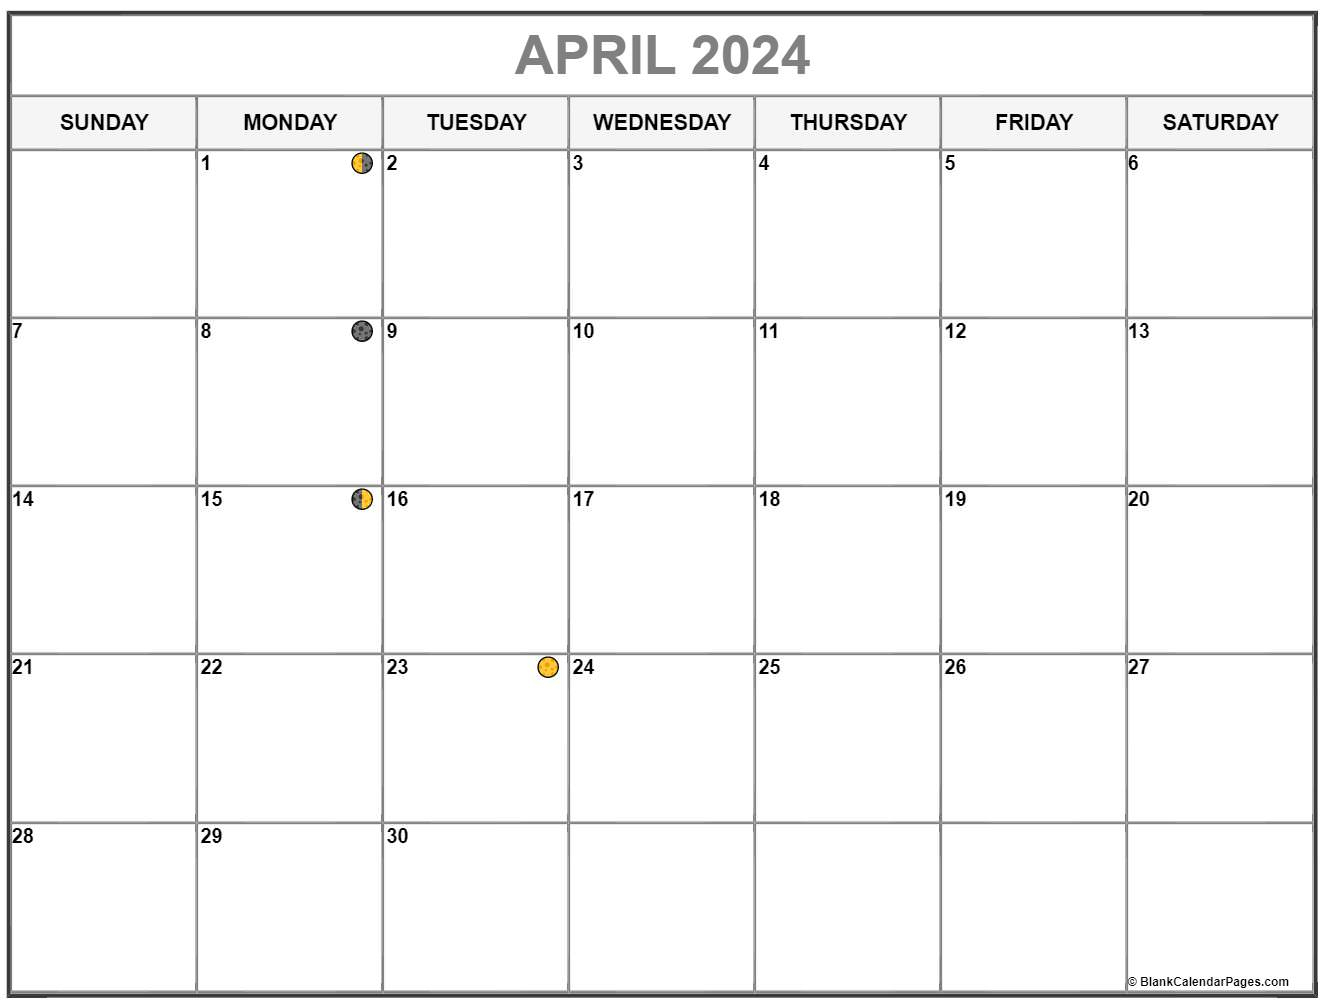 April 2024 Lunar Calendar | Moon Phase Calendar inside April Lunar Calendar 2024